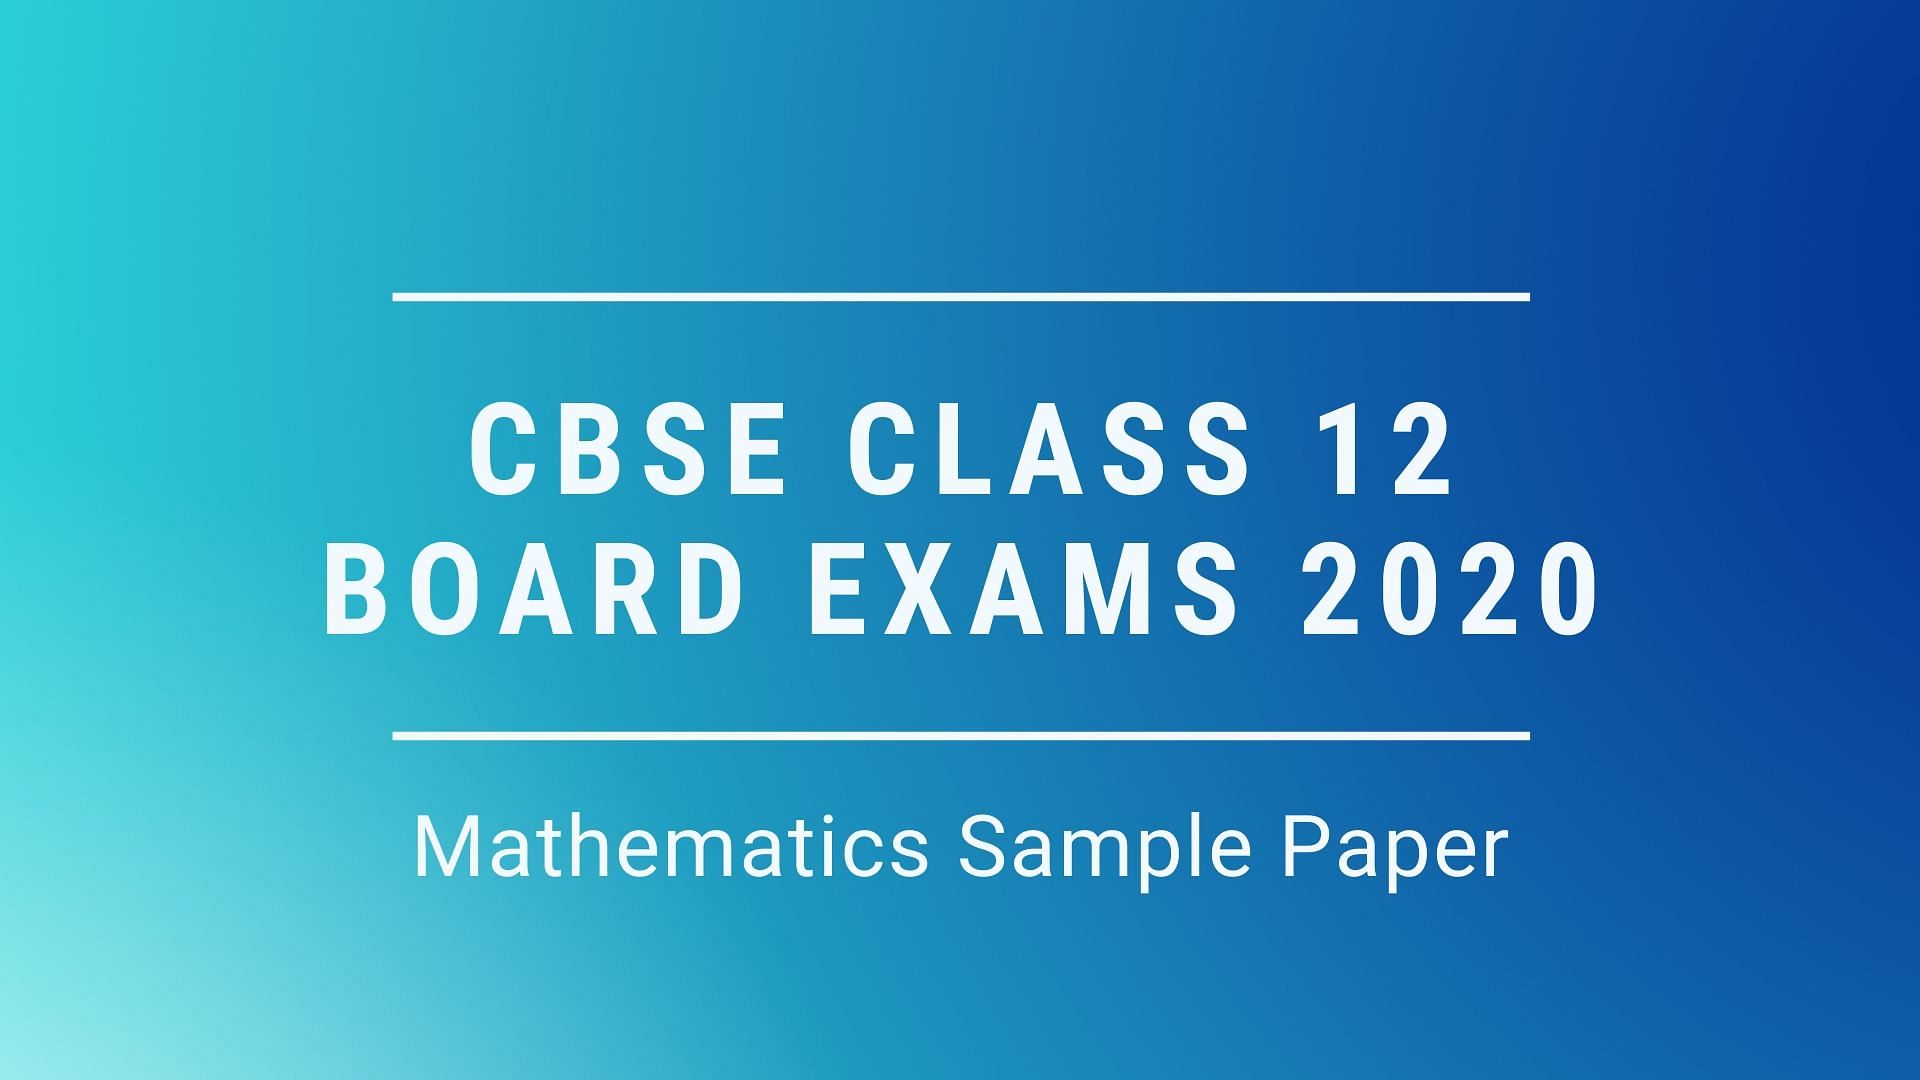 CBSE Class 12 Mathematics Sample Paper and Exam Pattern